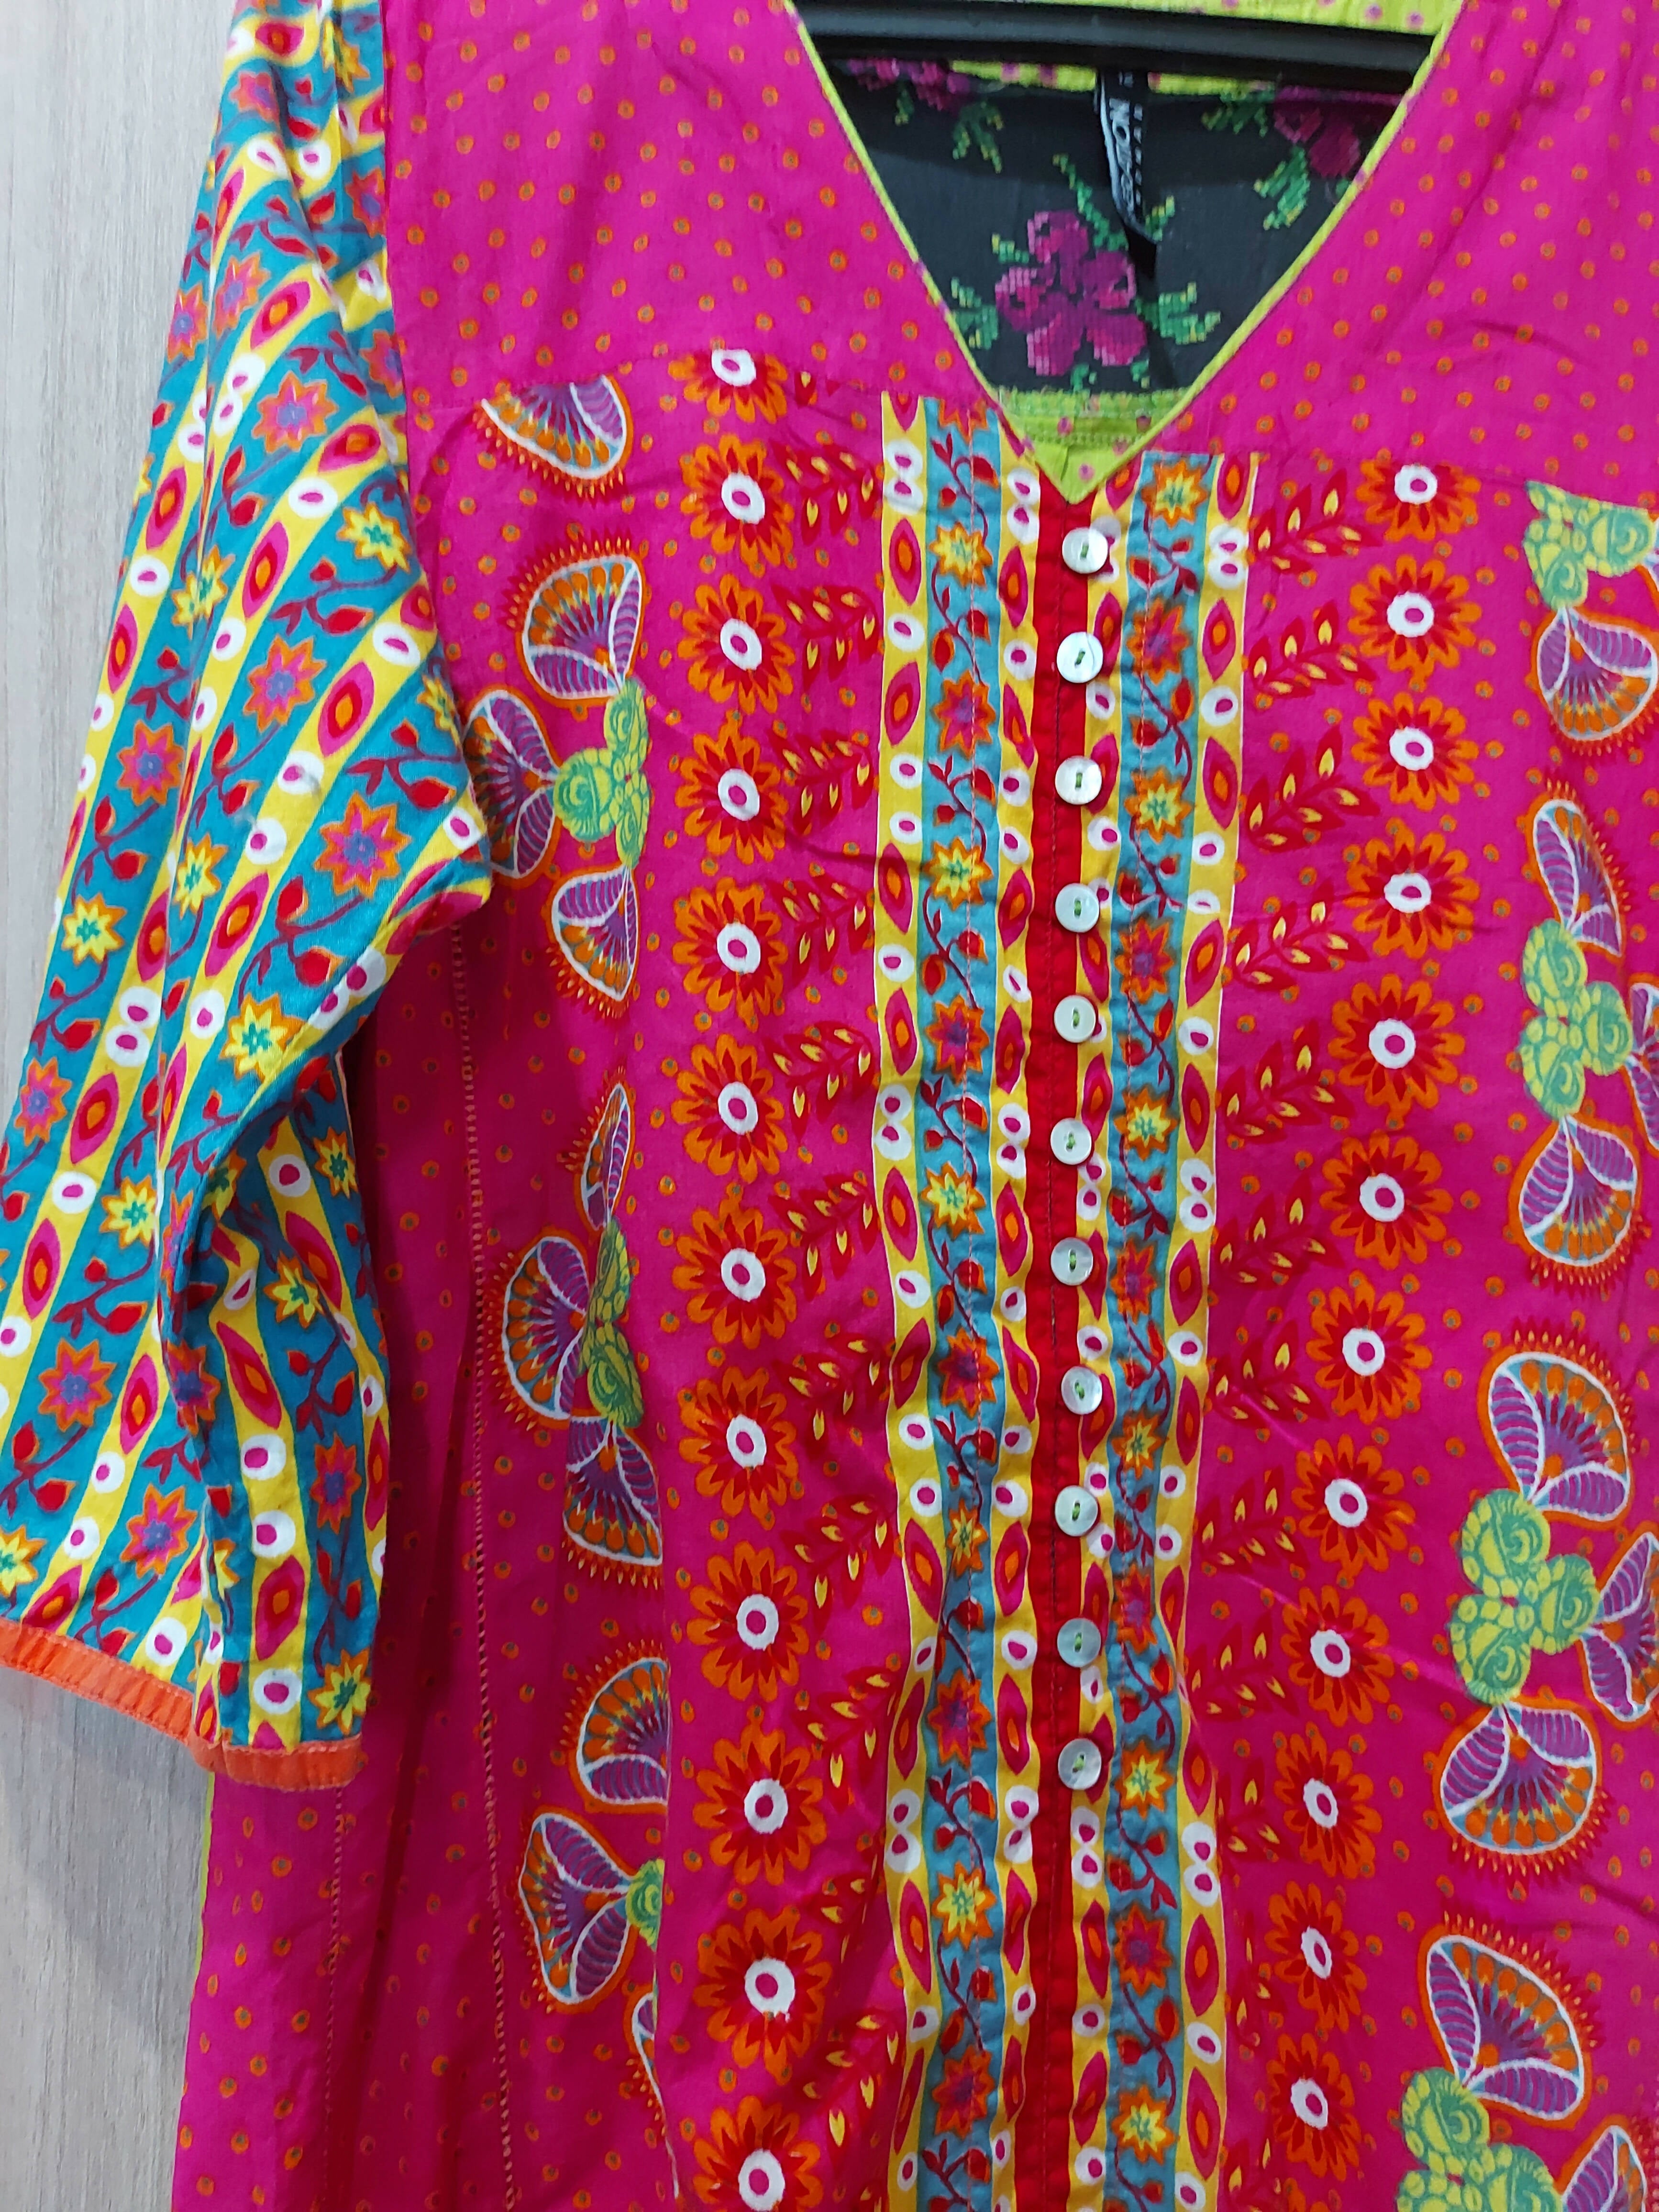 Generation | Pink & Green Colour 2 pc Suit (size 12 )| Women Branded Kurta | Preloved